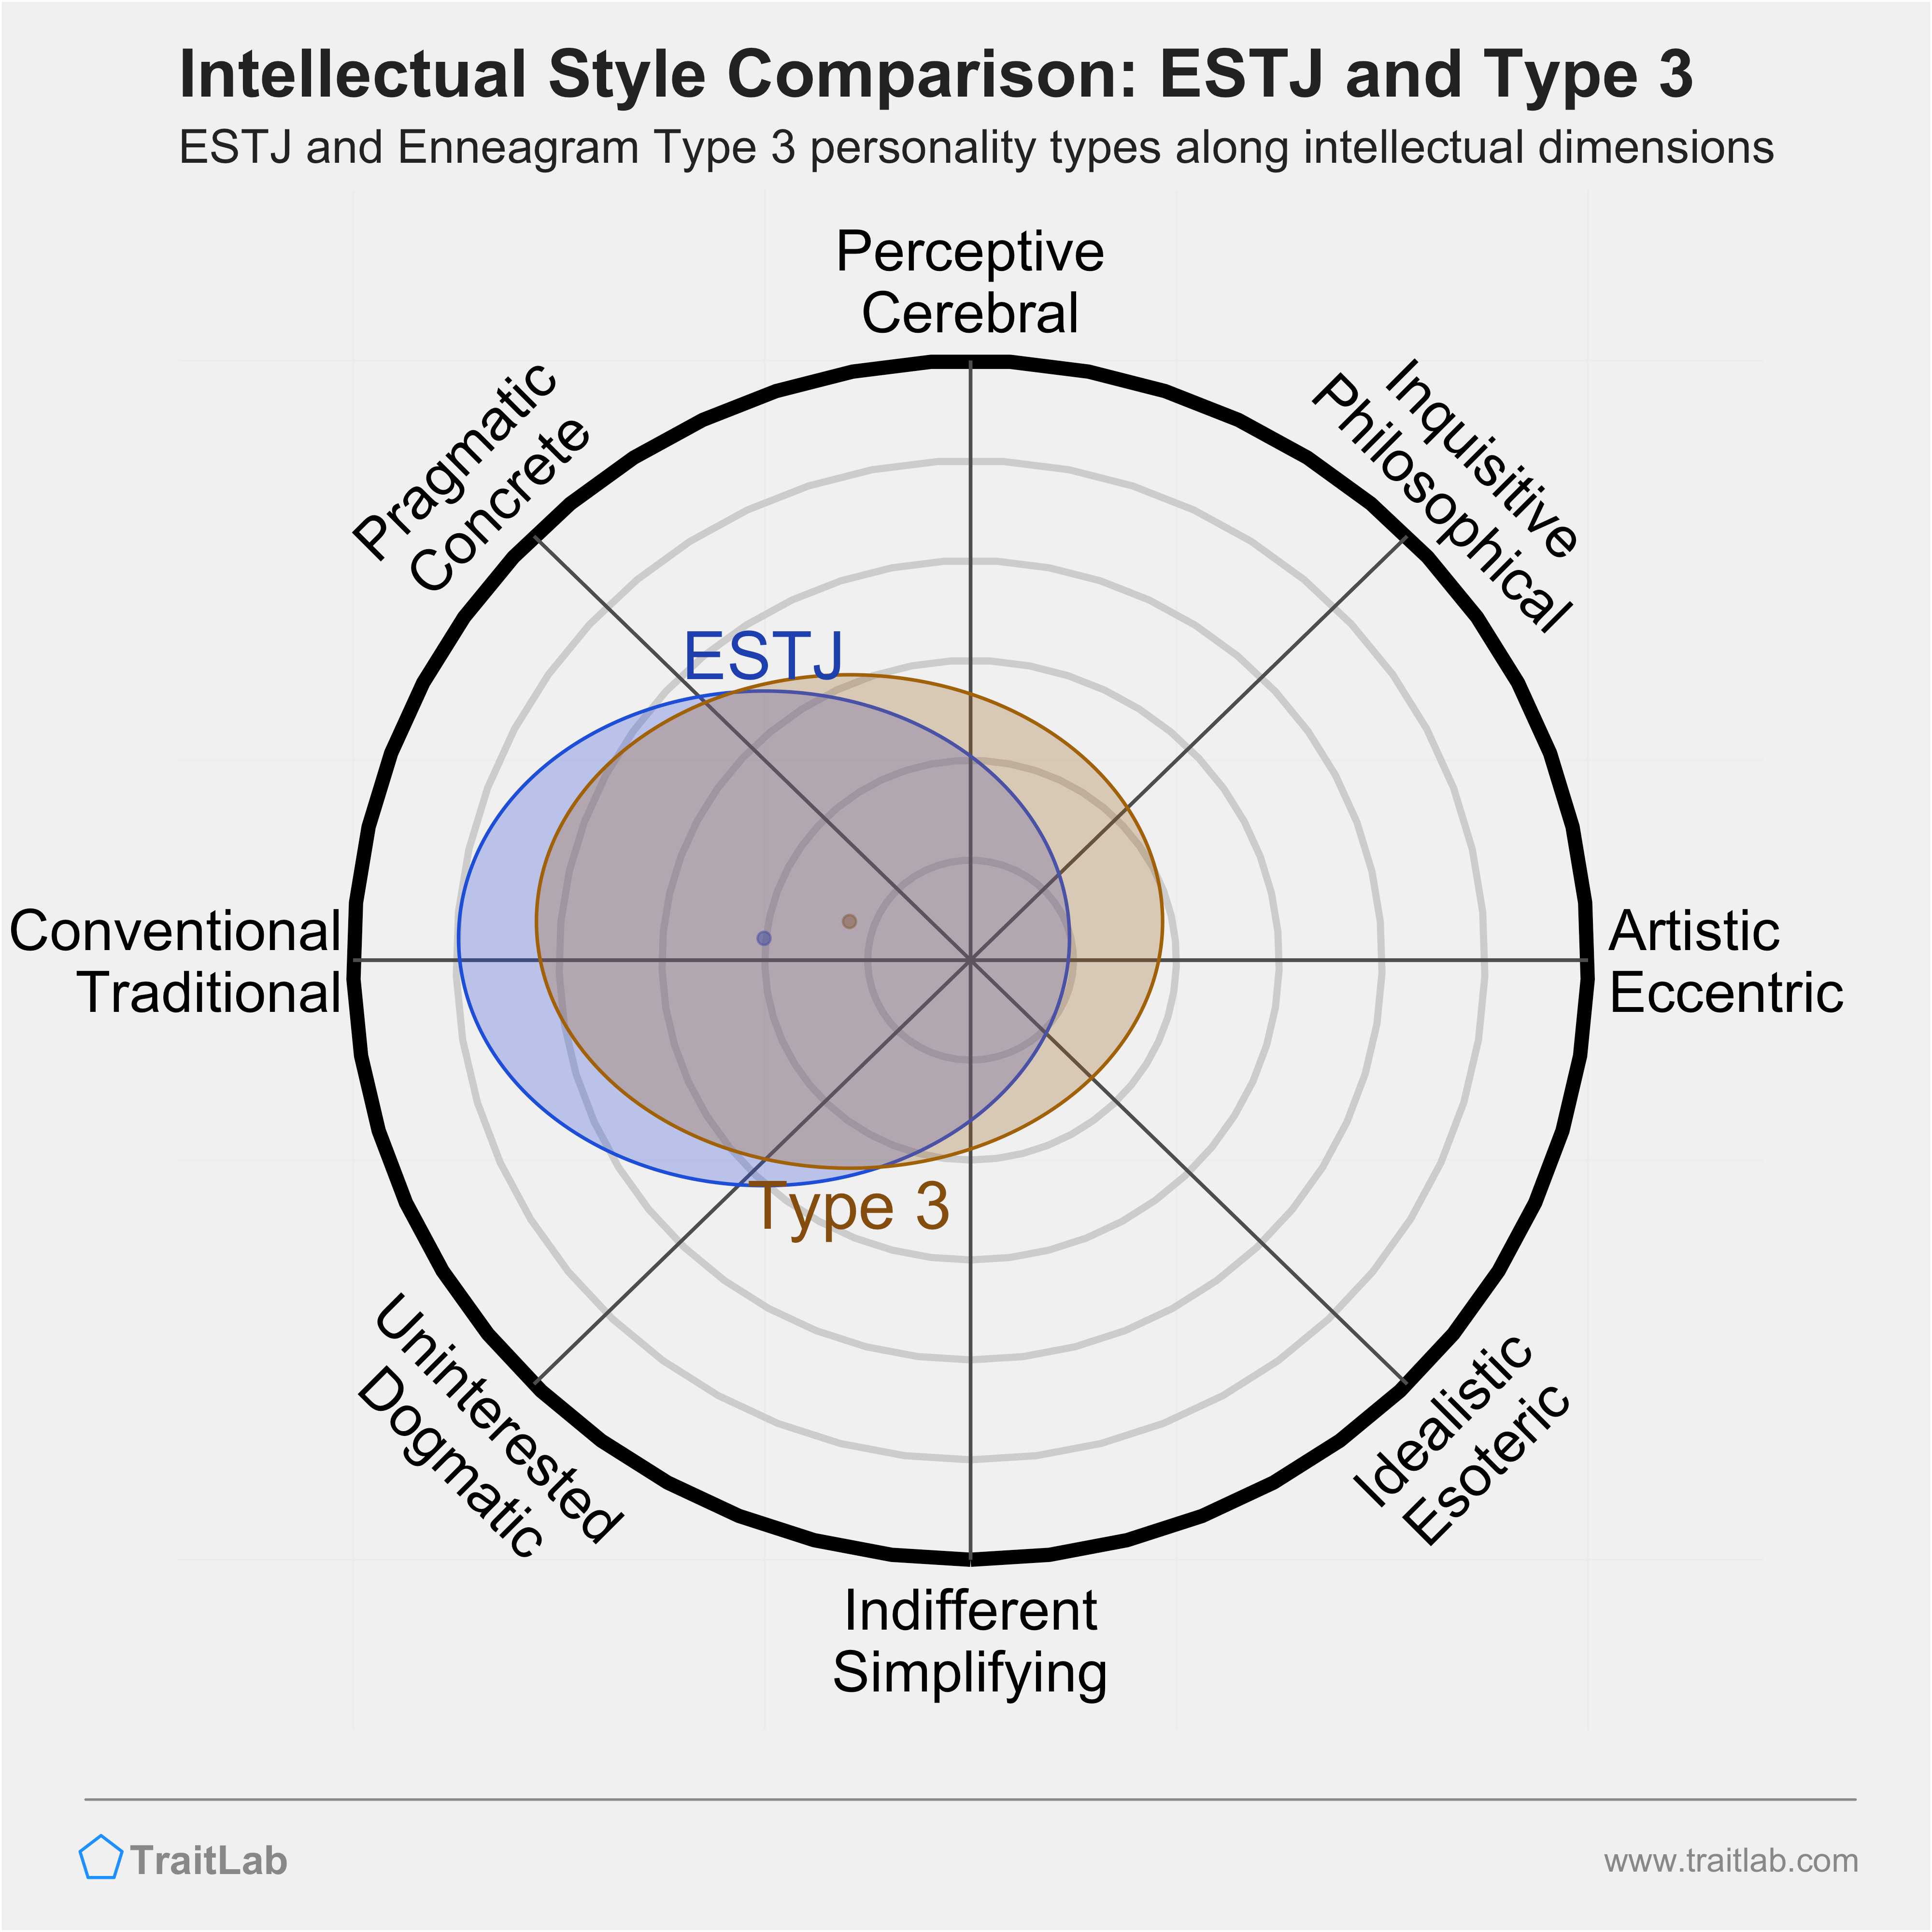 ESTJ and Type 3 comparison across intellectual dimensions